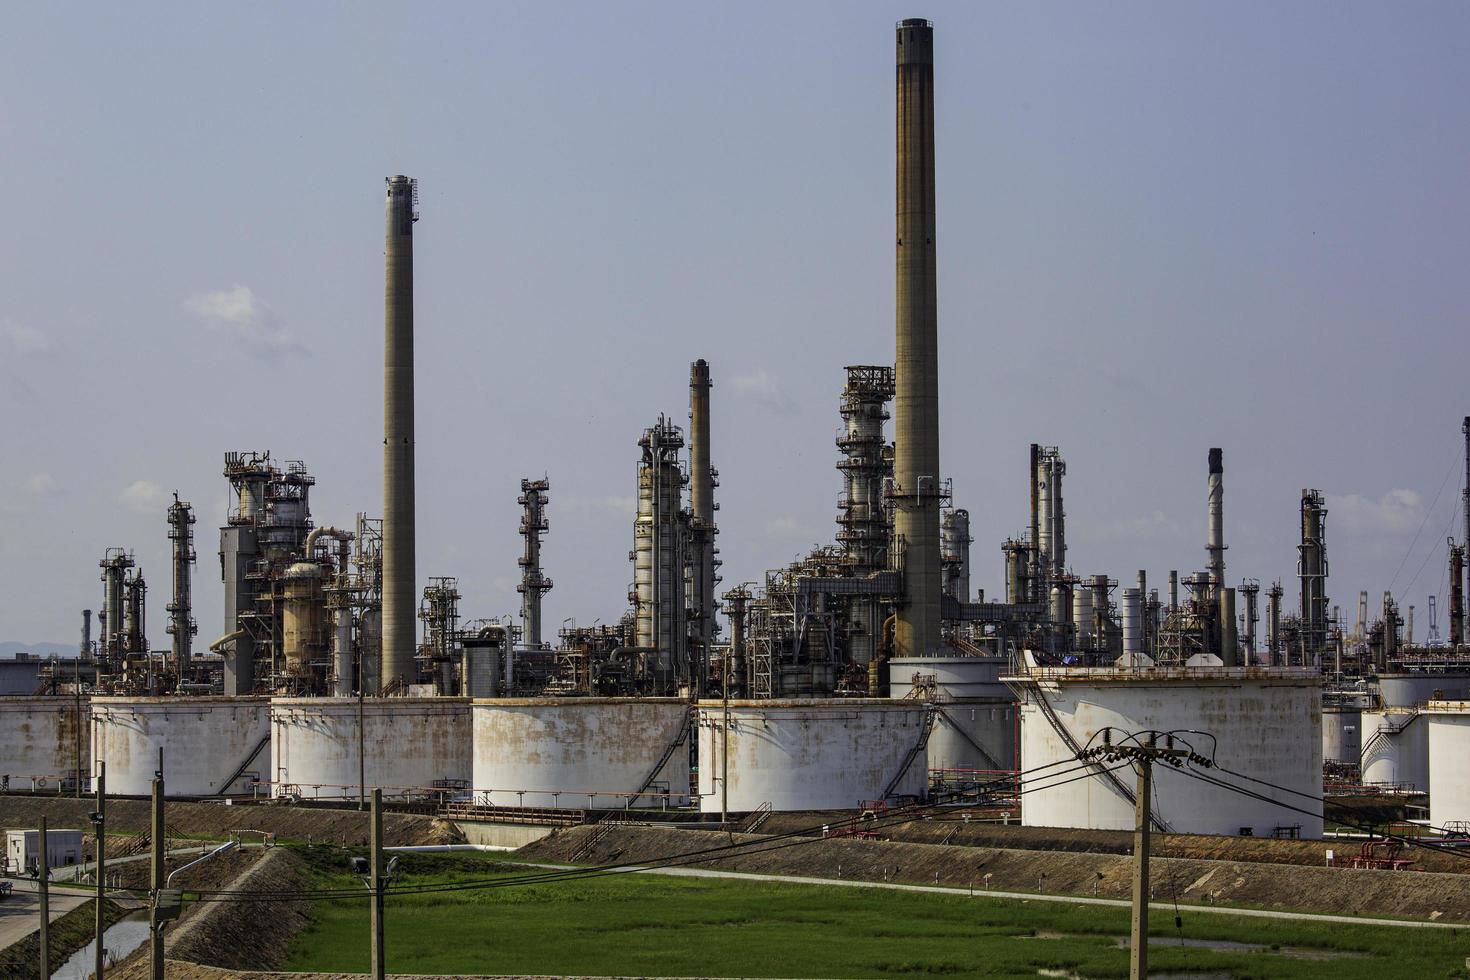 scène van tankolieraffinaderij en torenkolom van petrochemie foto